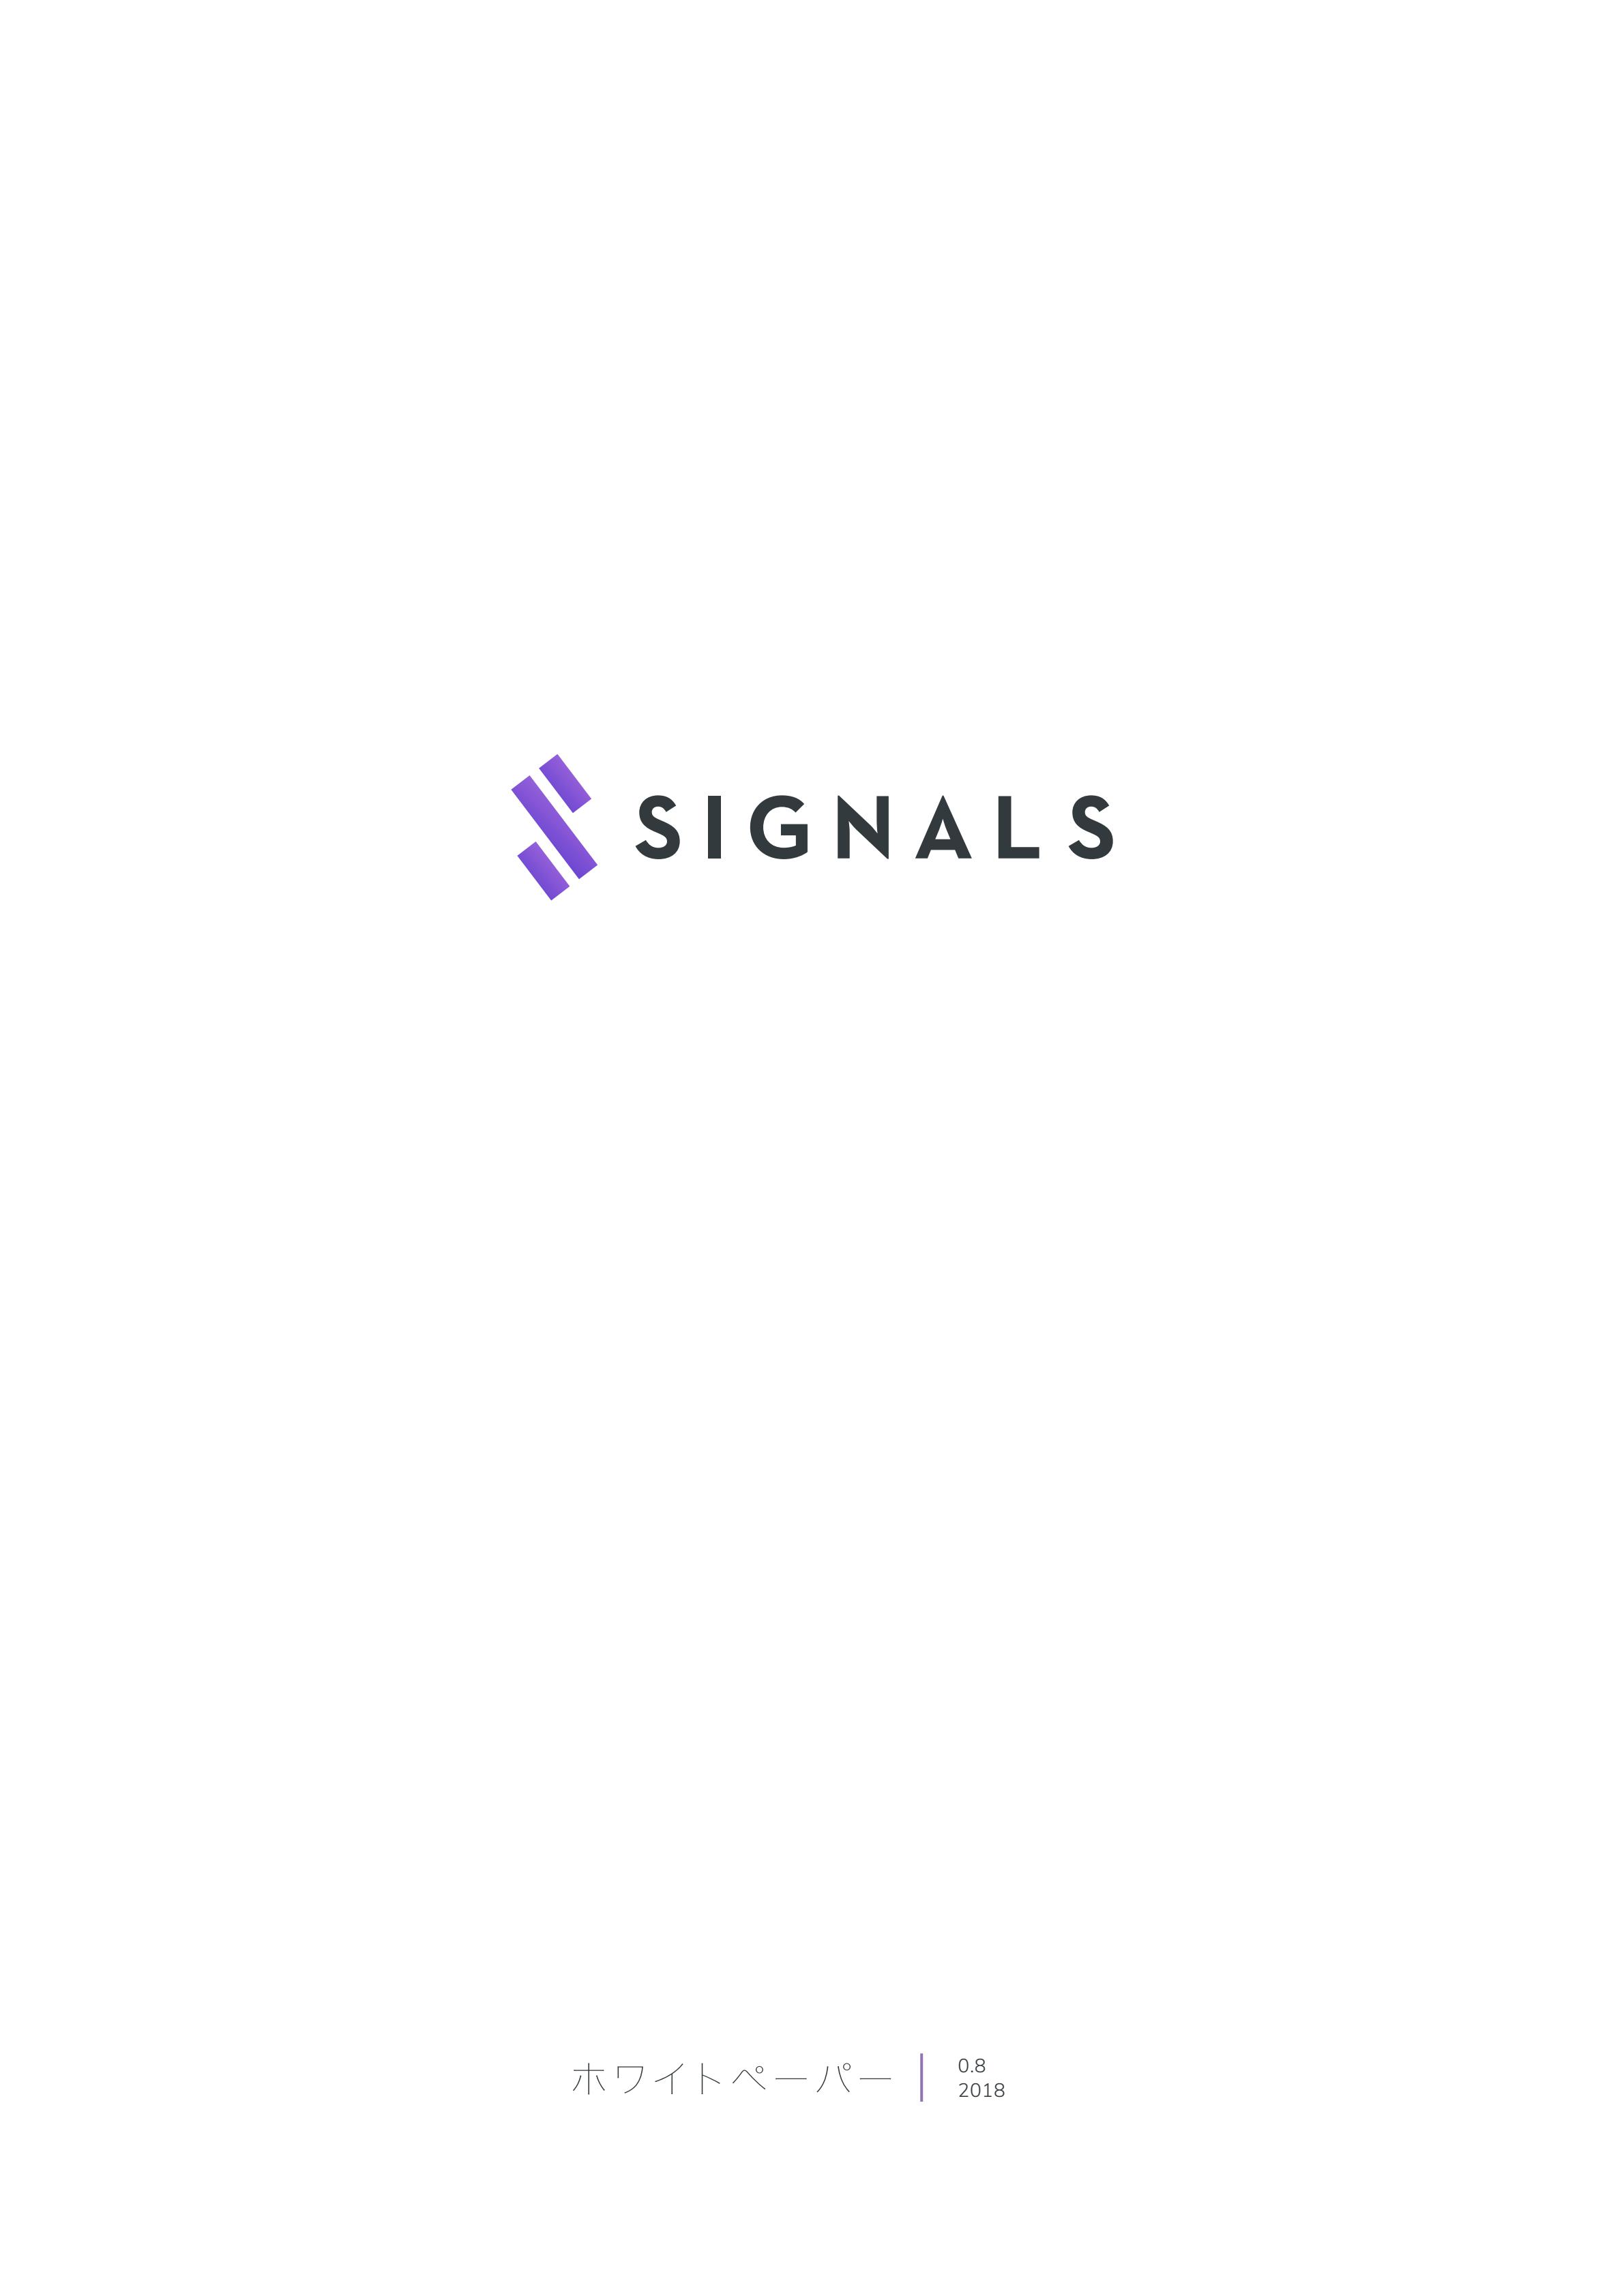 SGN_signals-whitepaper-ja_00.jpg